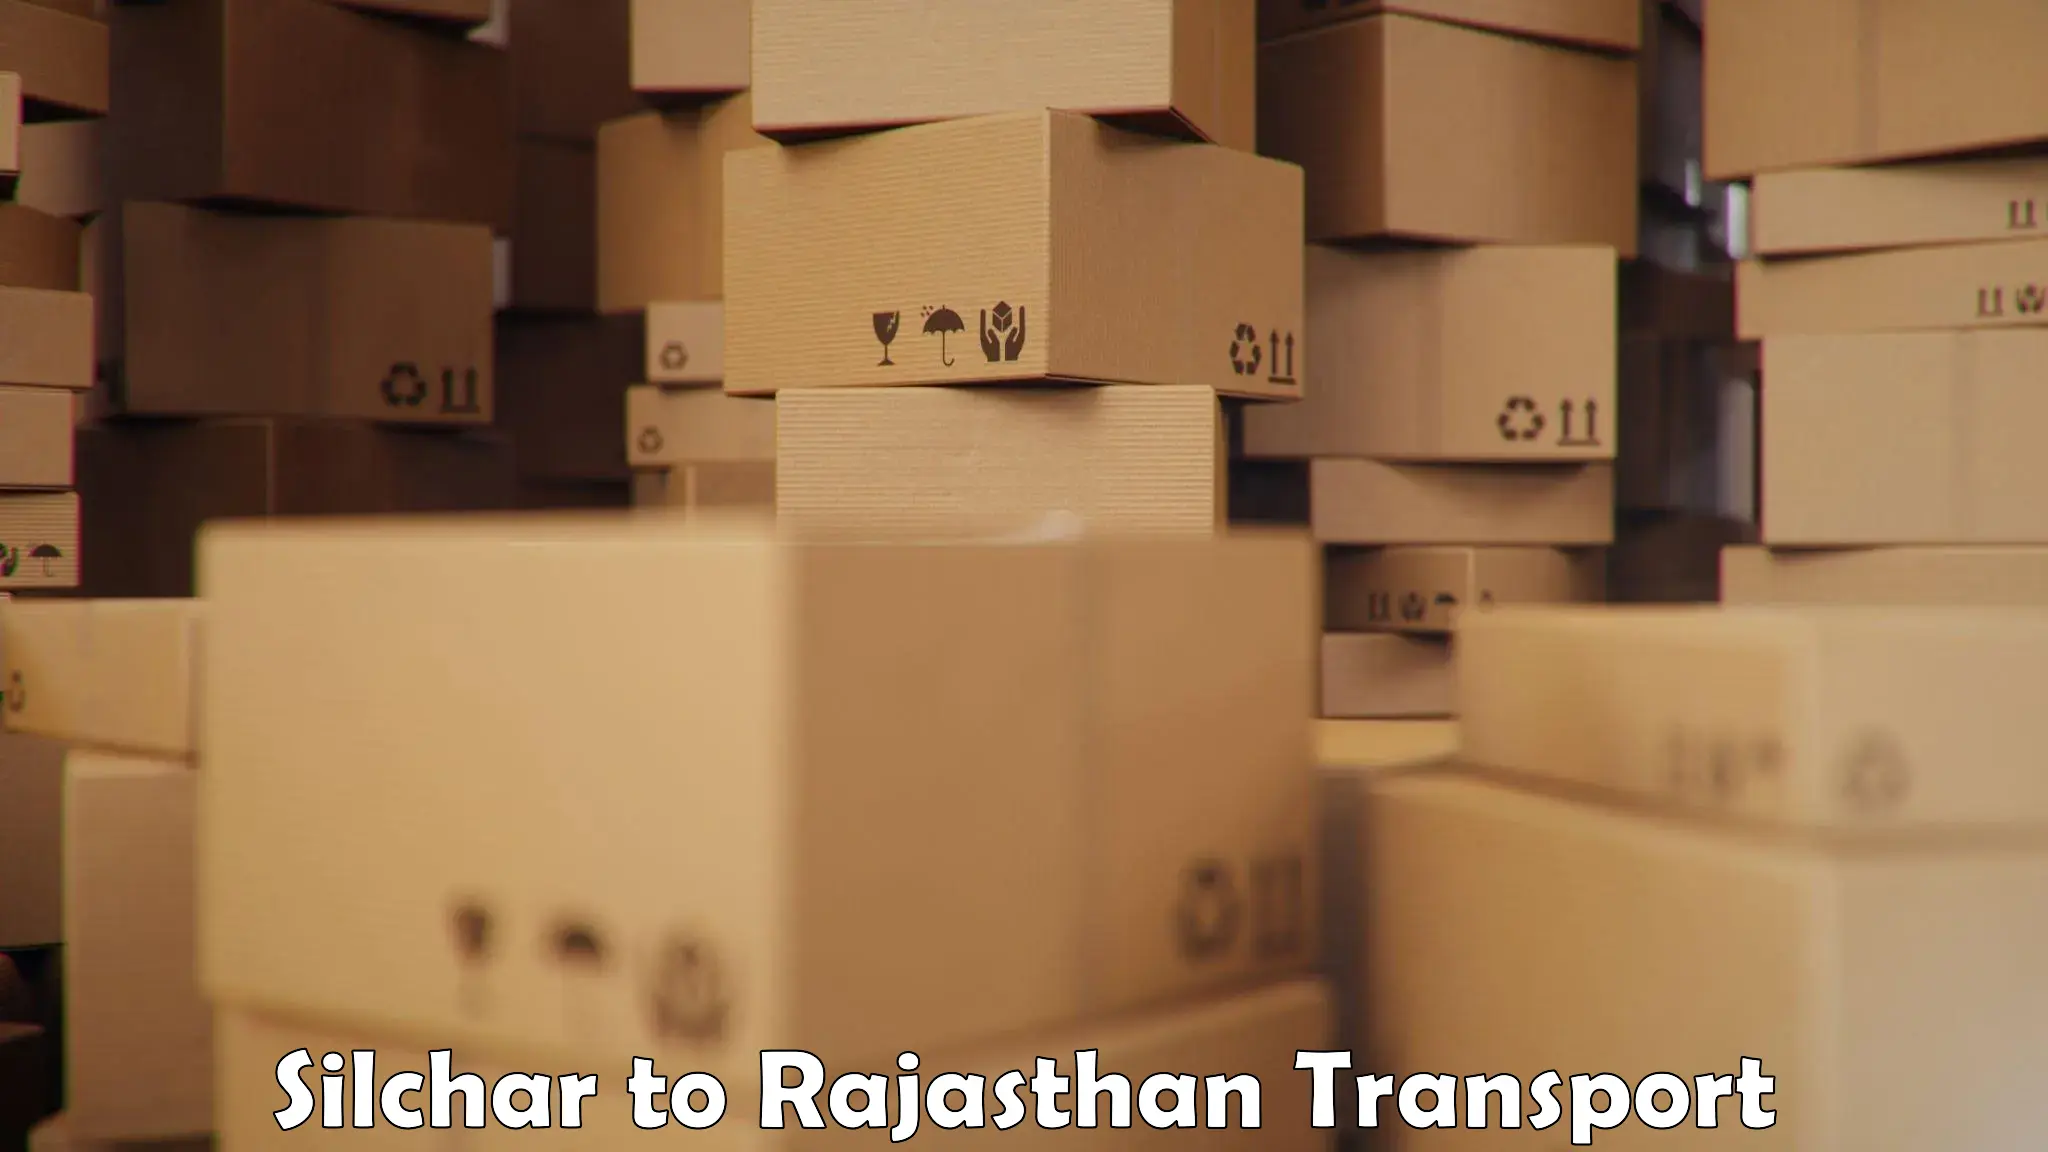 Truck transport companies in India Silchar to Danta Ramgarh